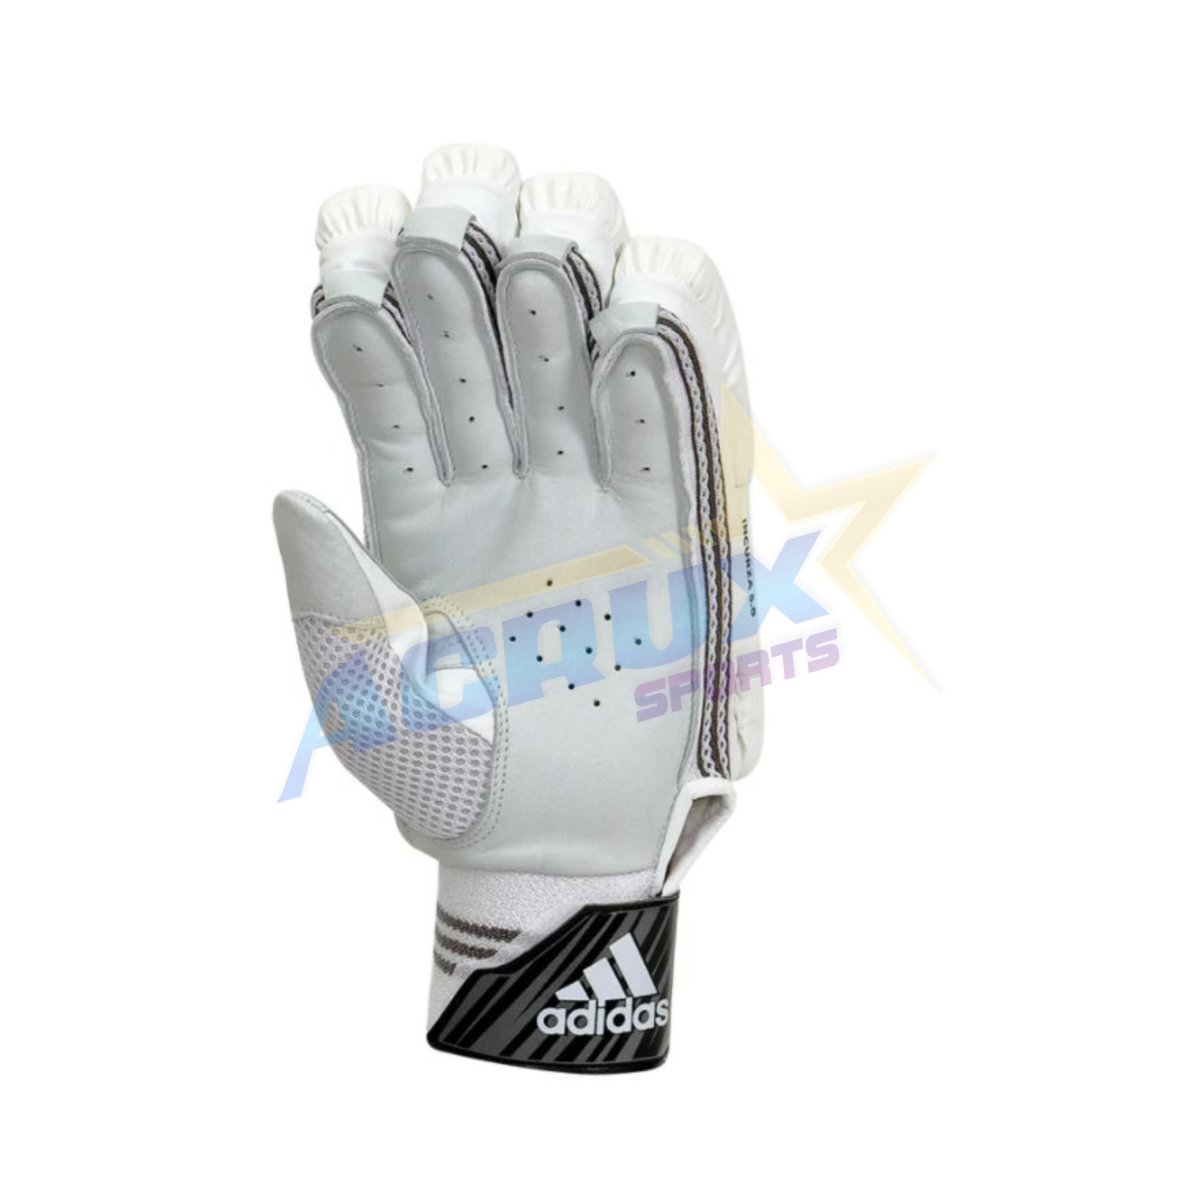 Adidas Incurza 5.0 Cricket Batting Gloves